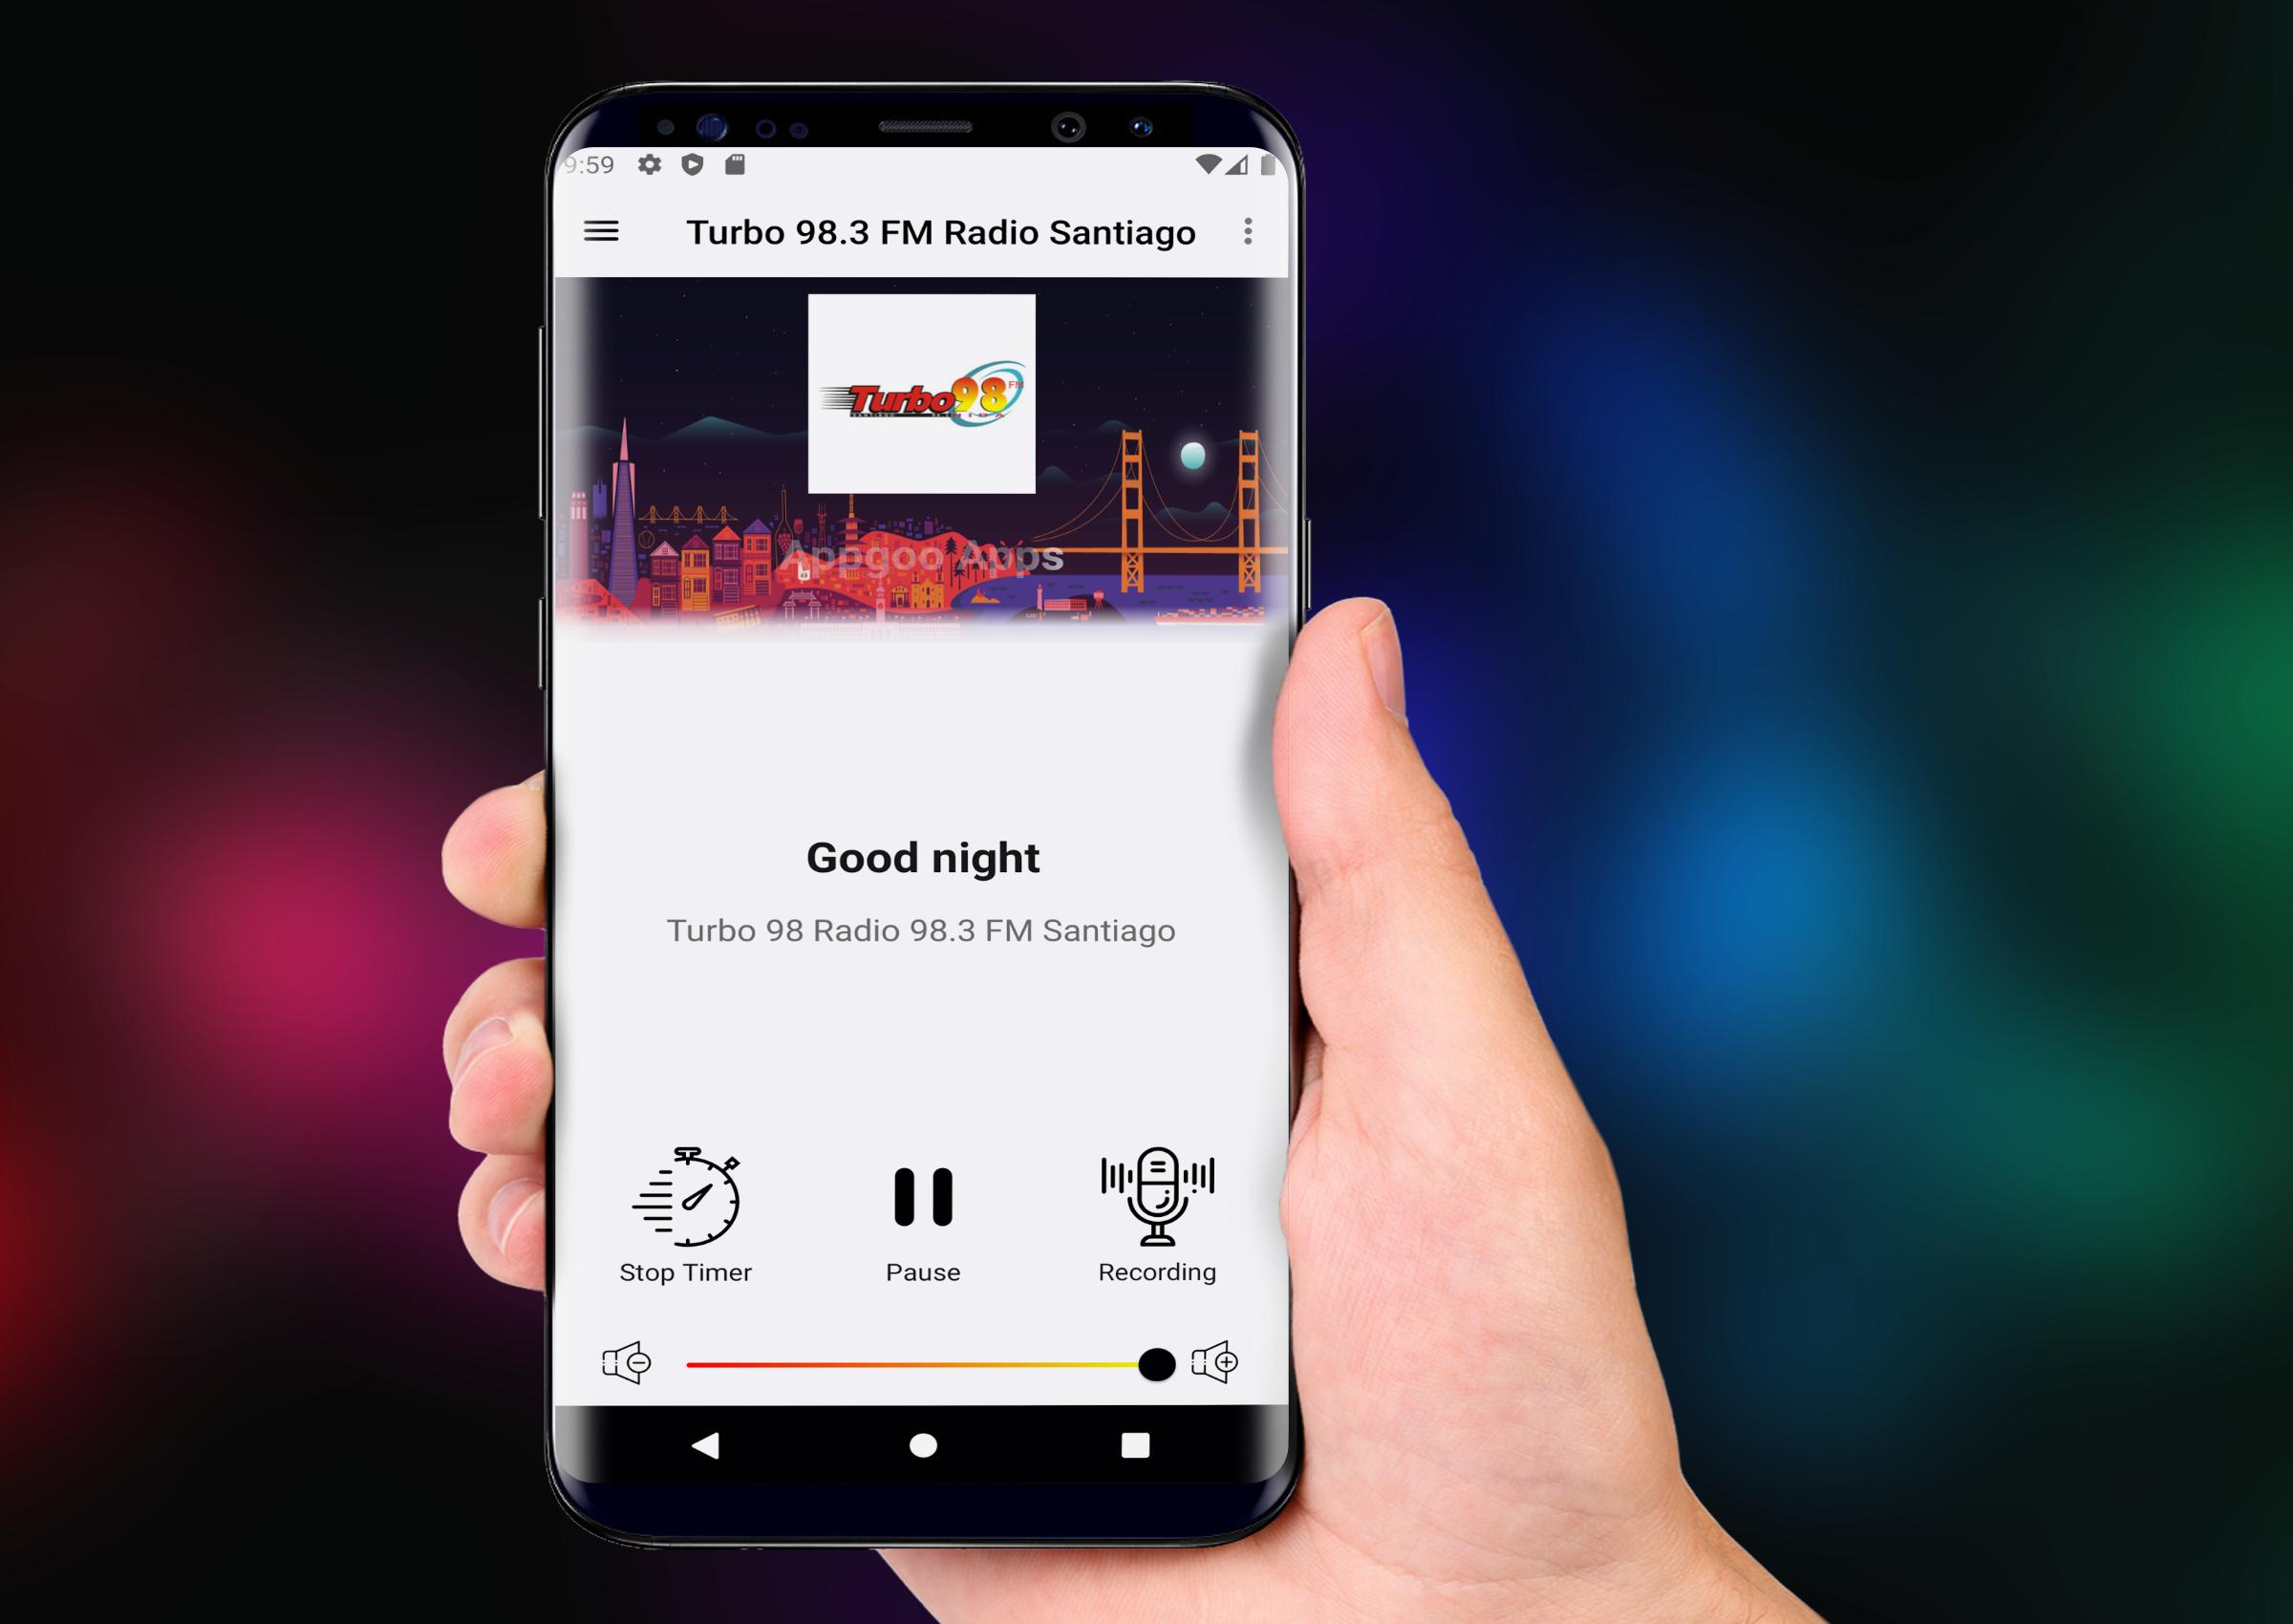 Turbo 98 Radio 98.3 FM Santiago - DO Gratis Online APK for Android Download